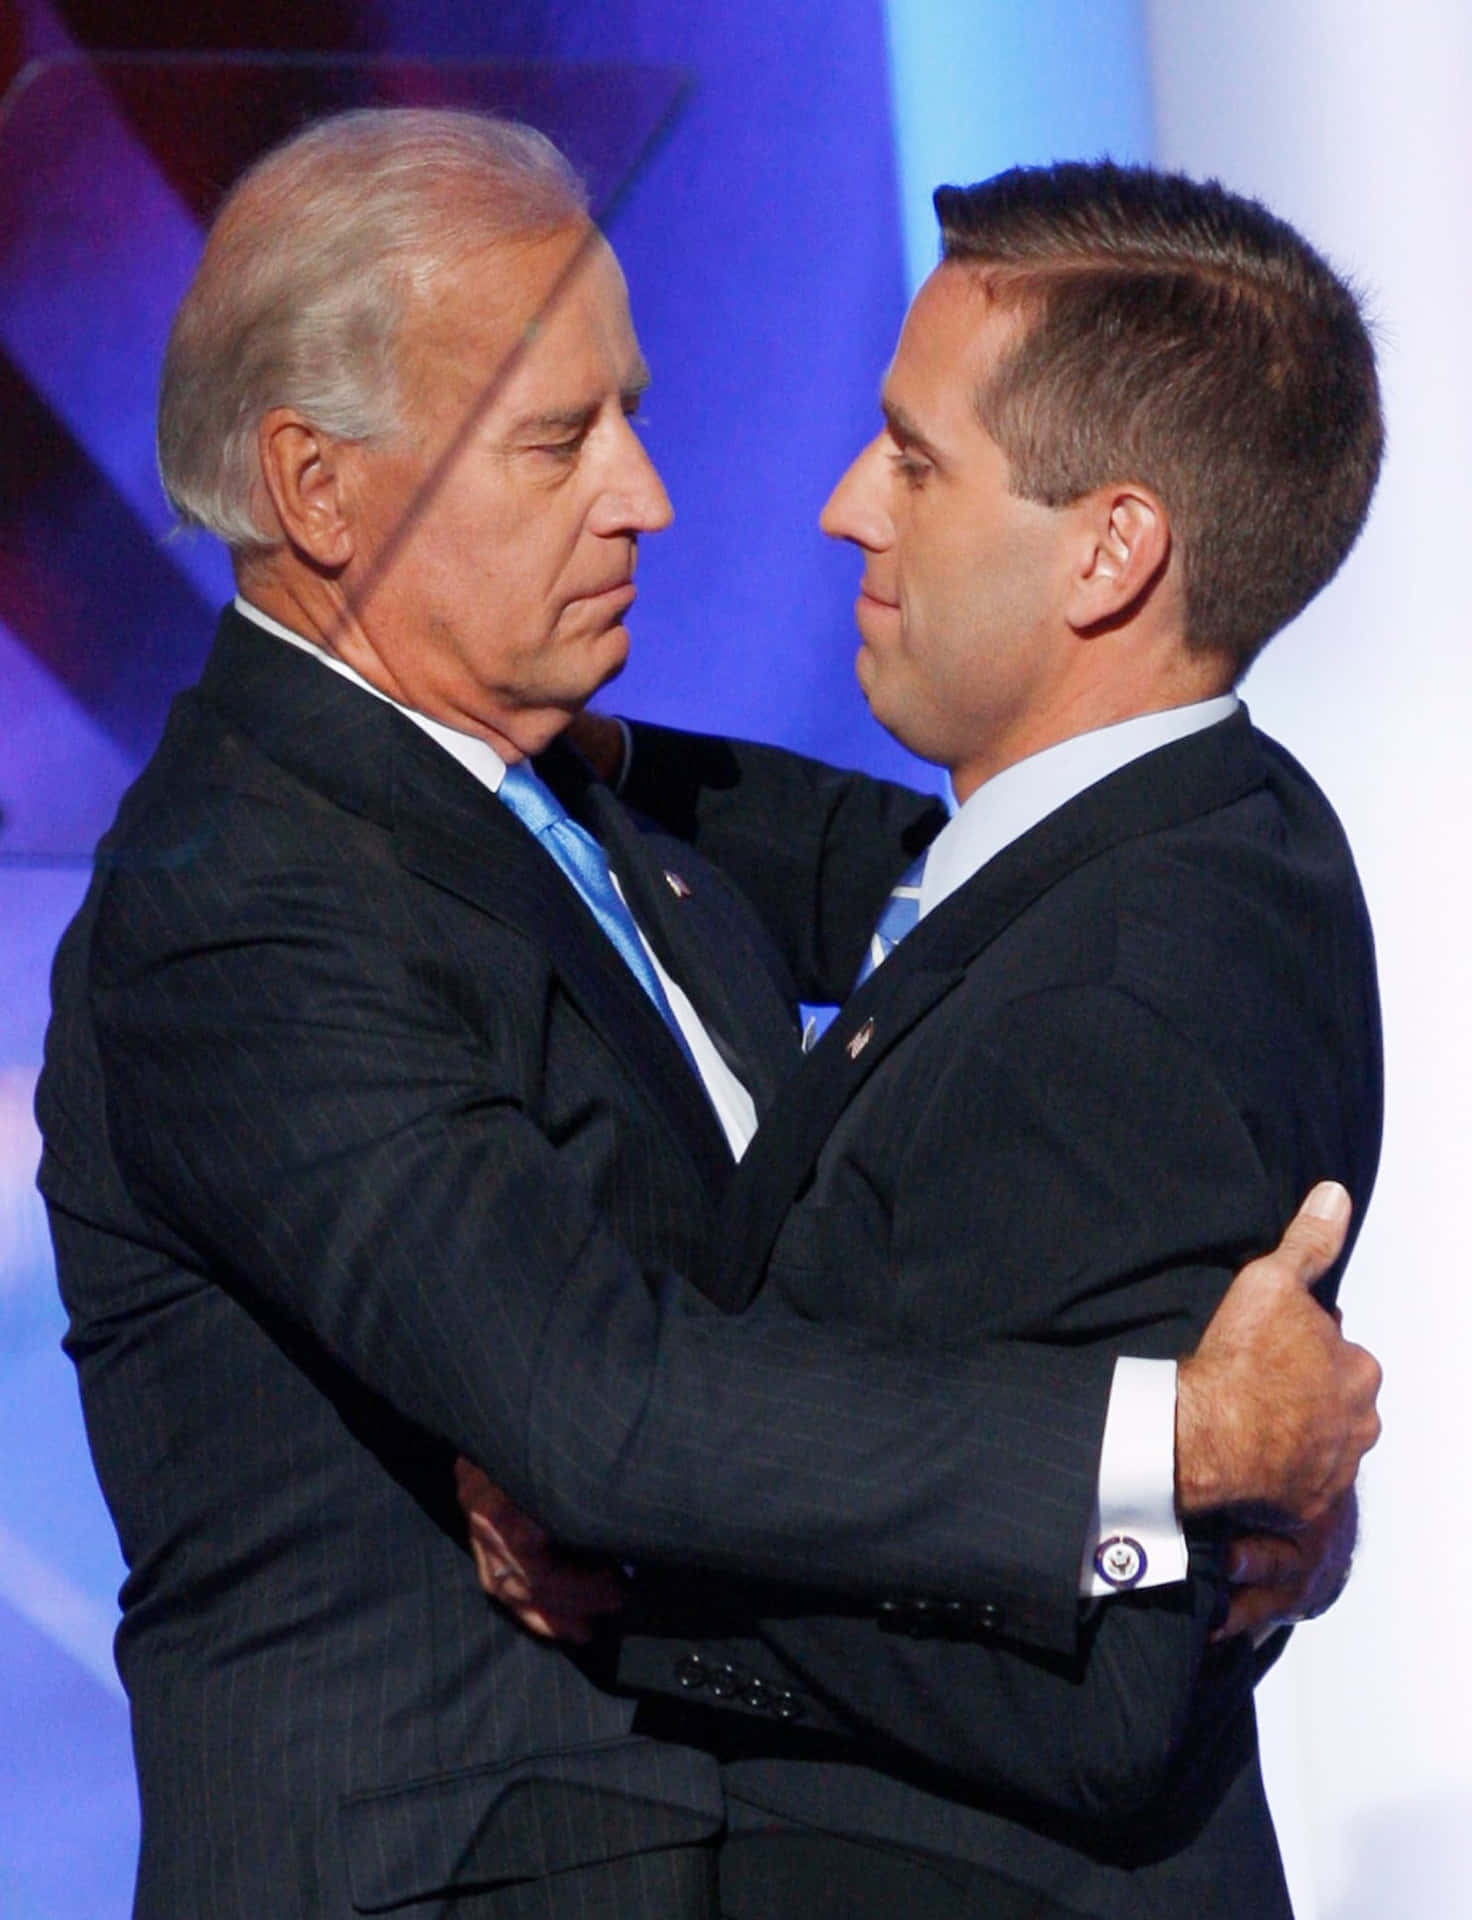 Joe Biden during his presidential campaign